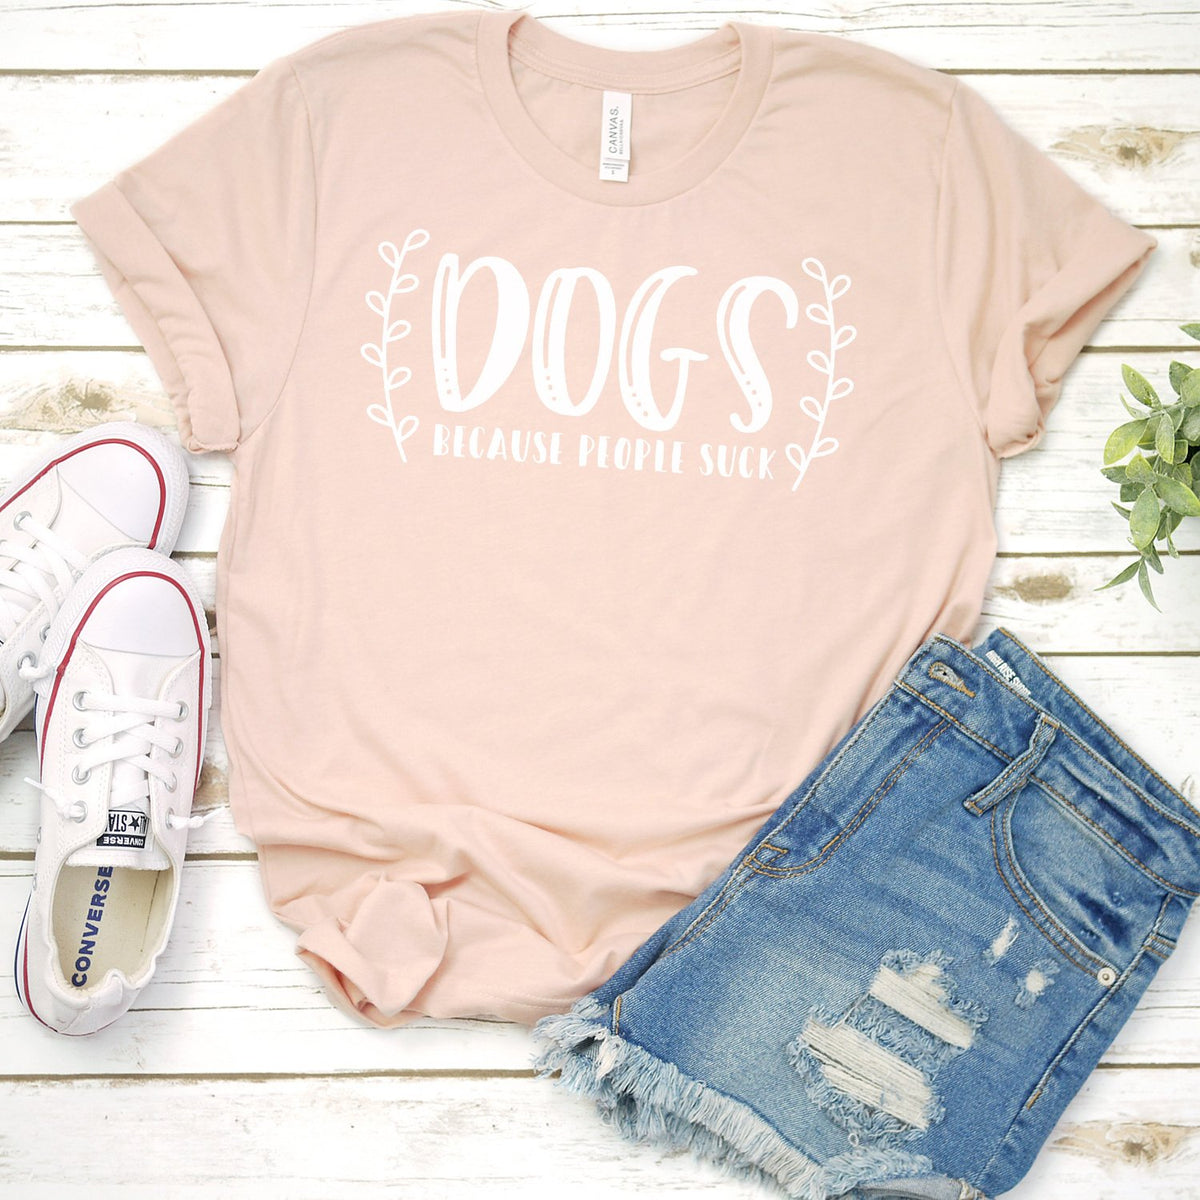 DOGS Because People Suck - Short Sleeve Tee Shirt